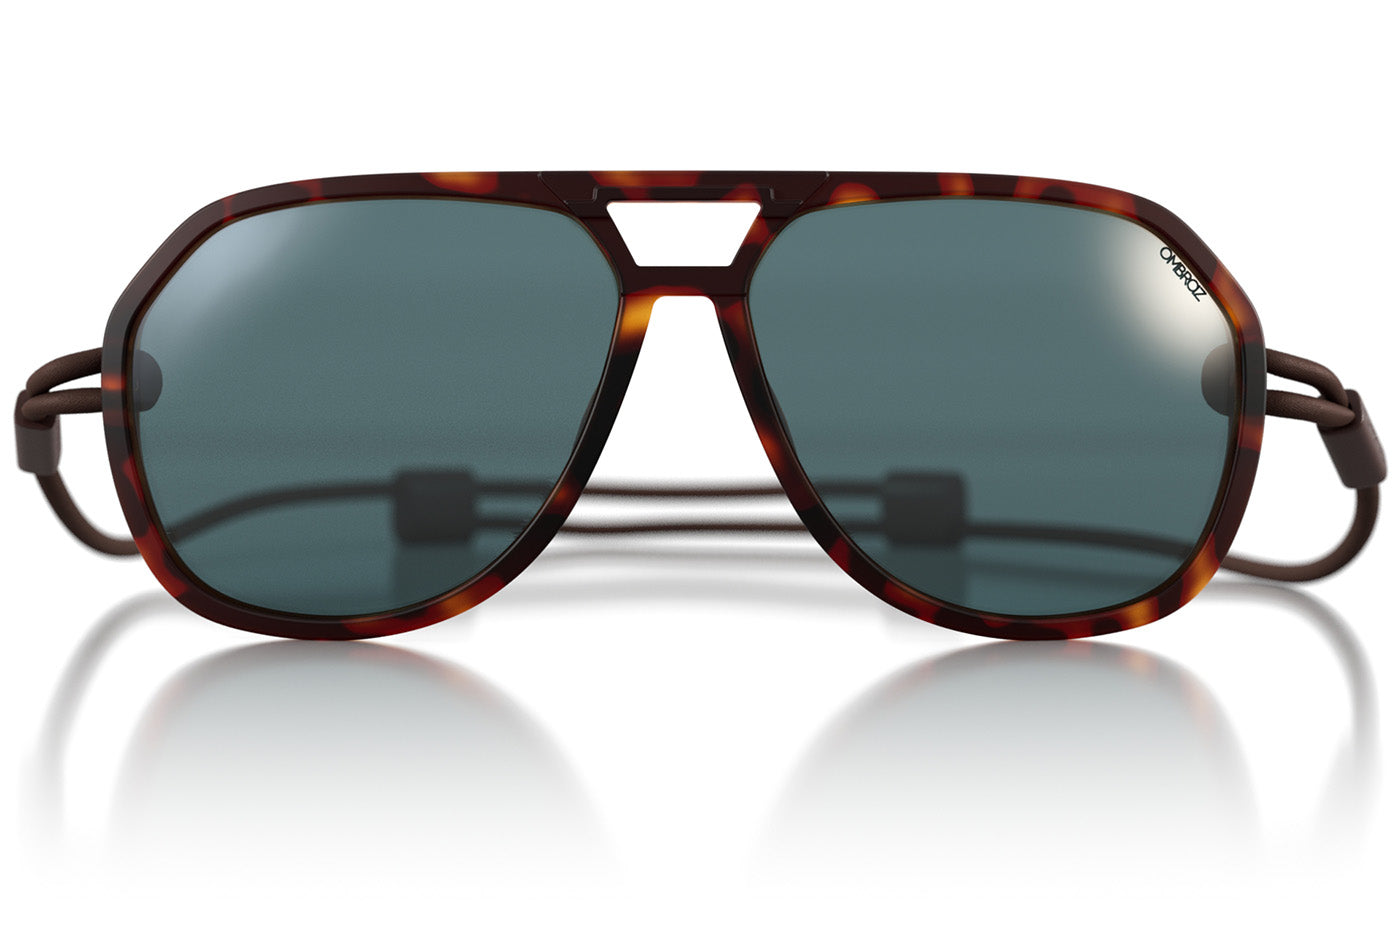 Men's Sport Sunglasses, Shop & Buy Online, South Africa